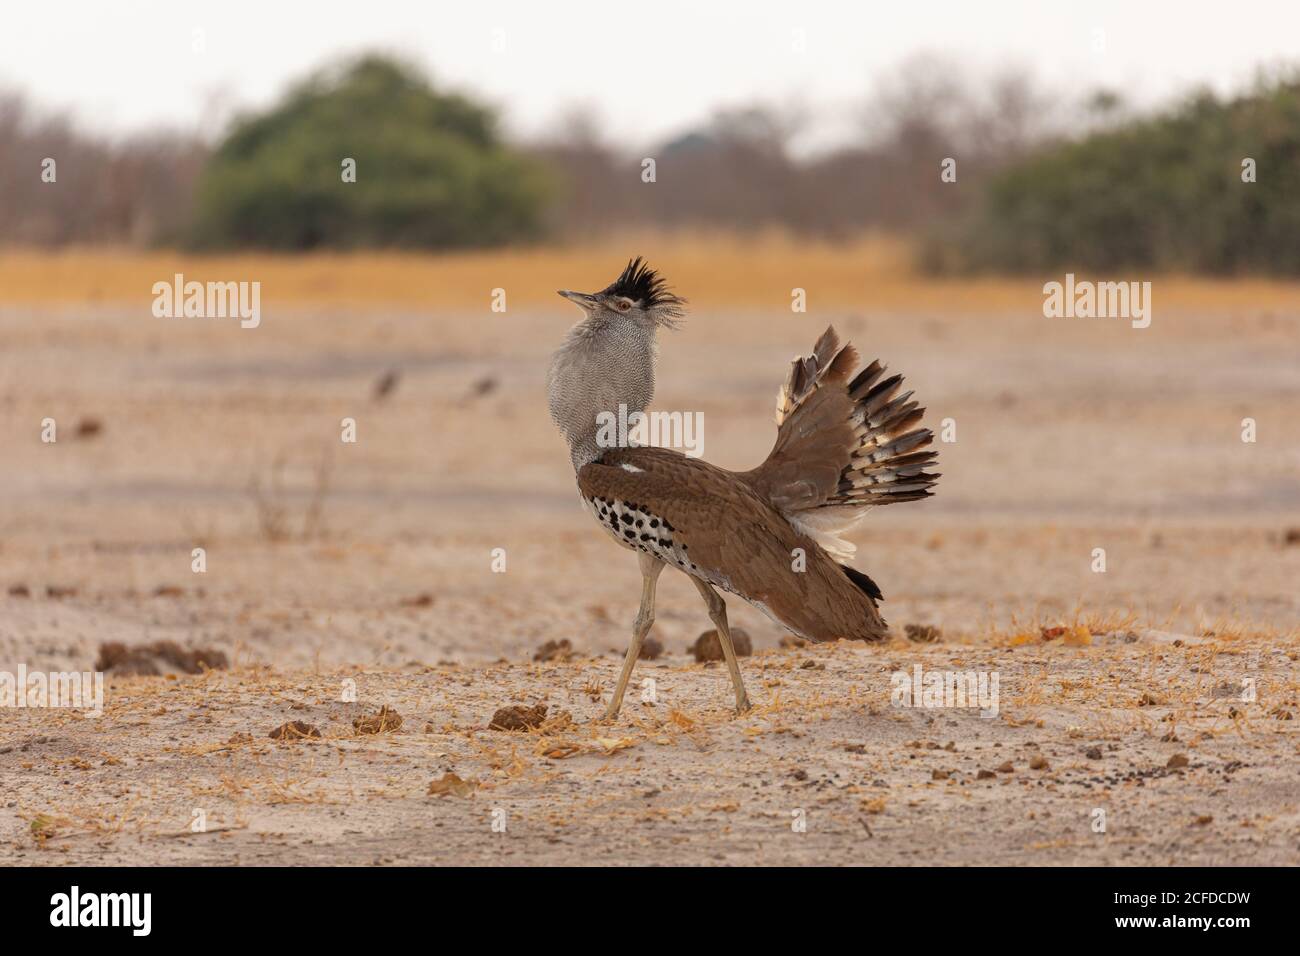 Avutarda Kori or Kori bustard bird native to Africa standing on dry land in Savuti area in Botswana with feathers spread Stock Photo